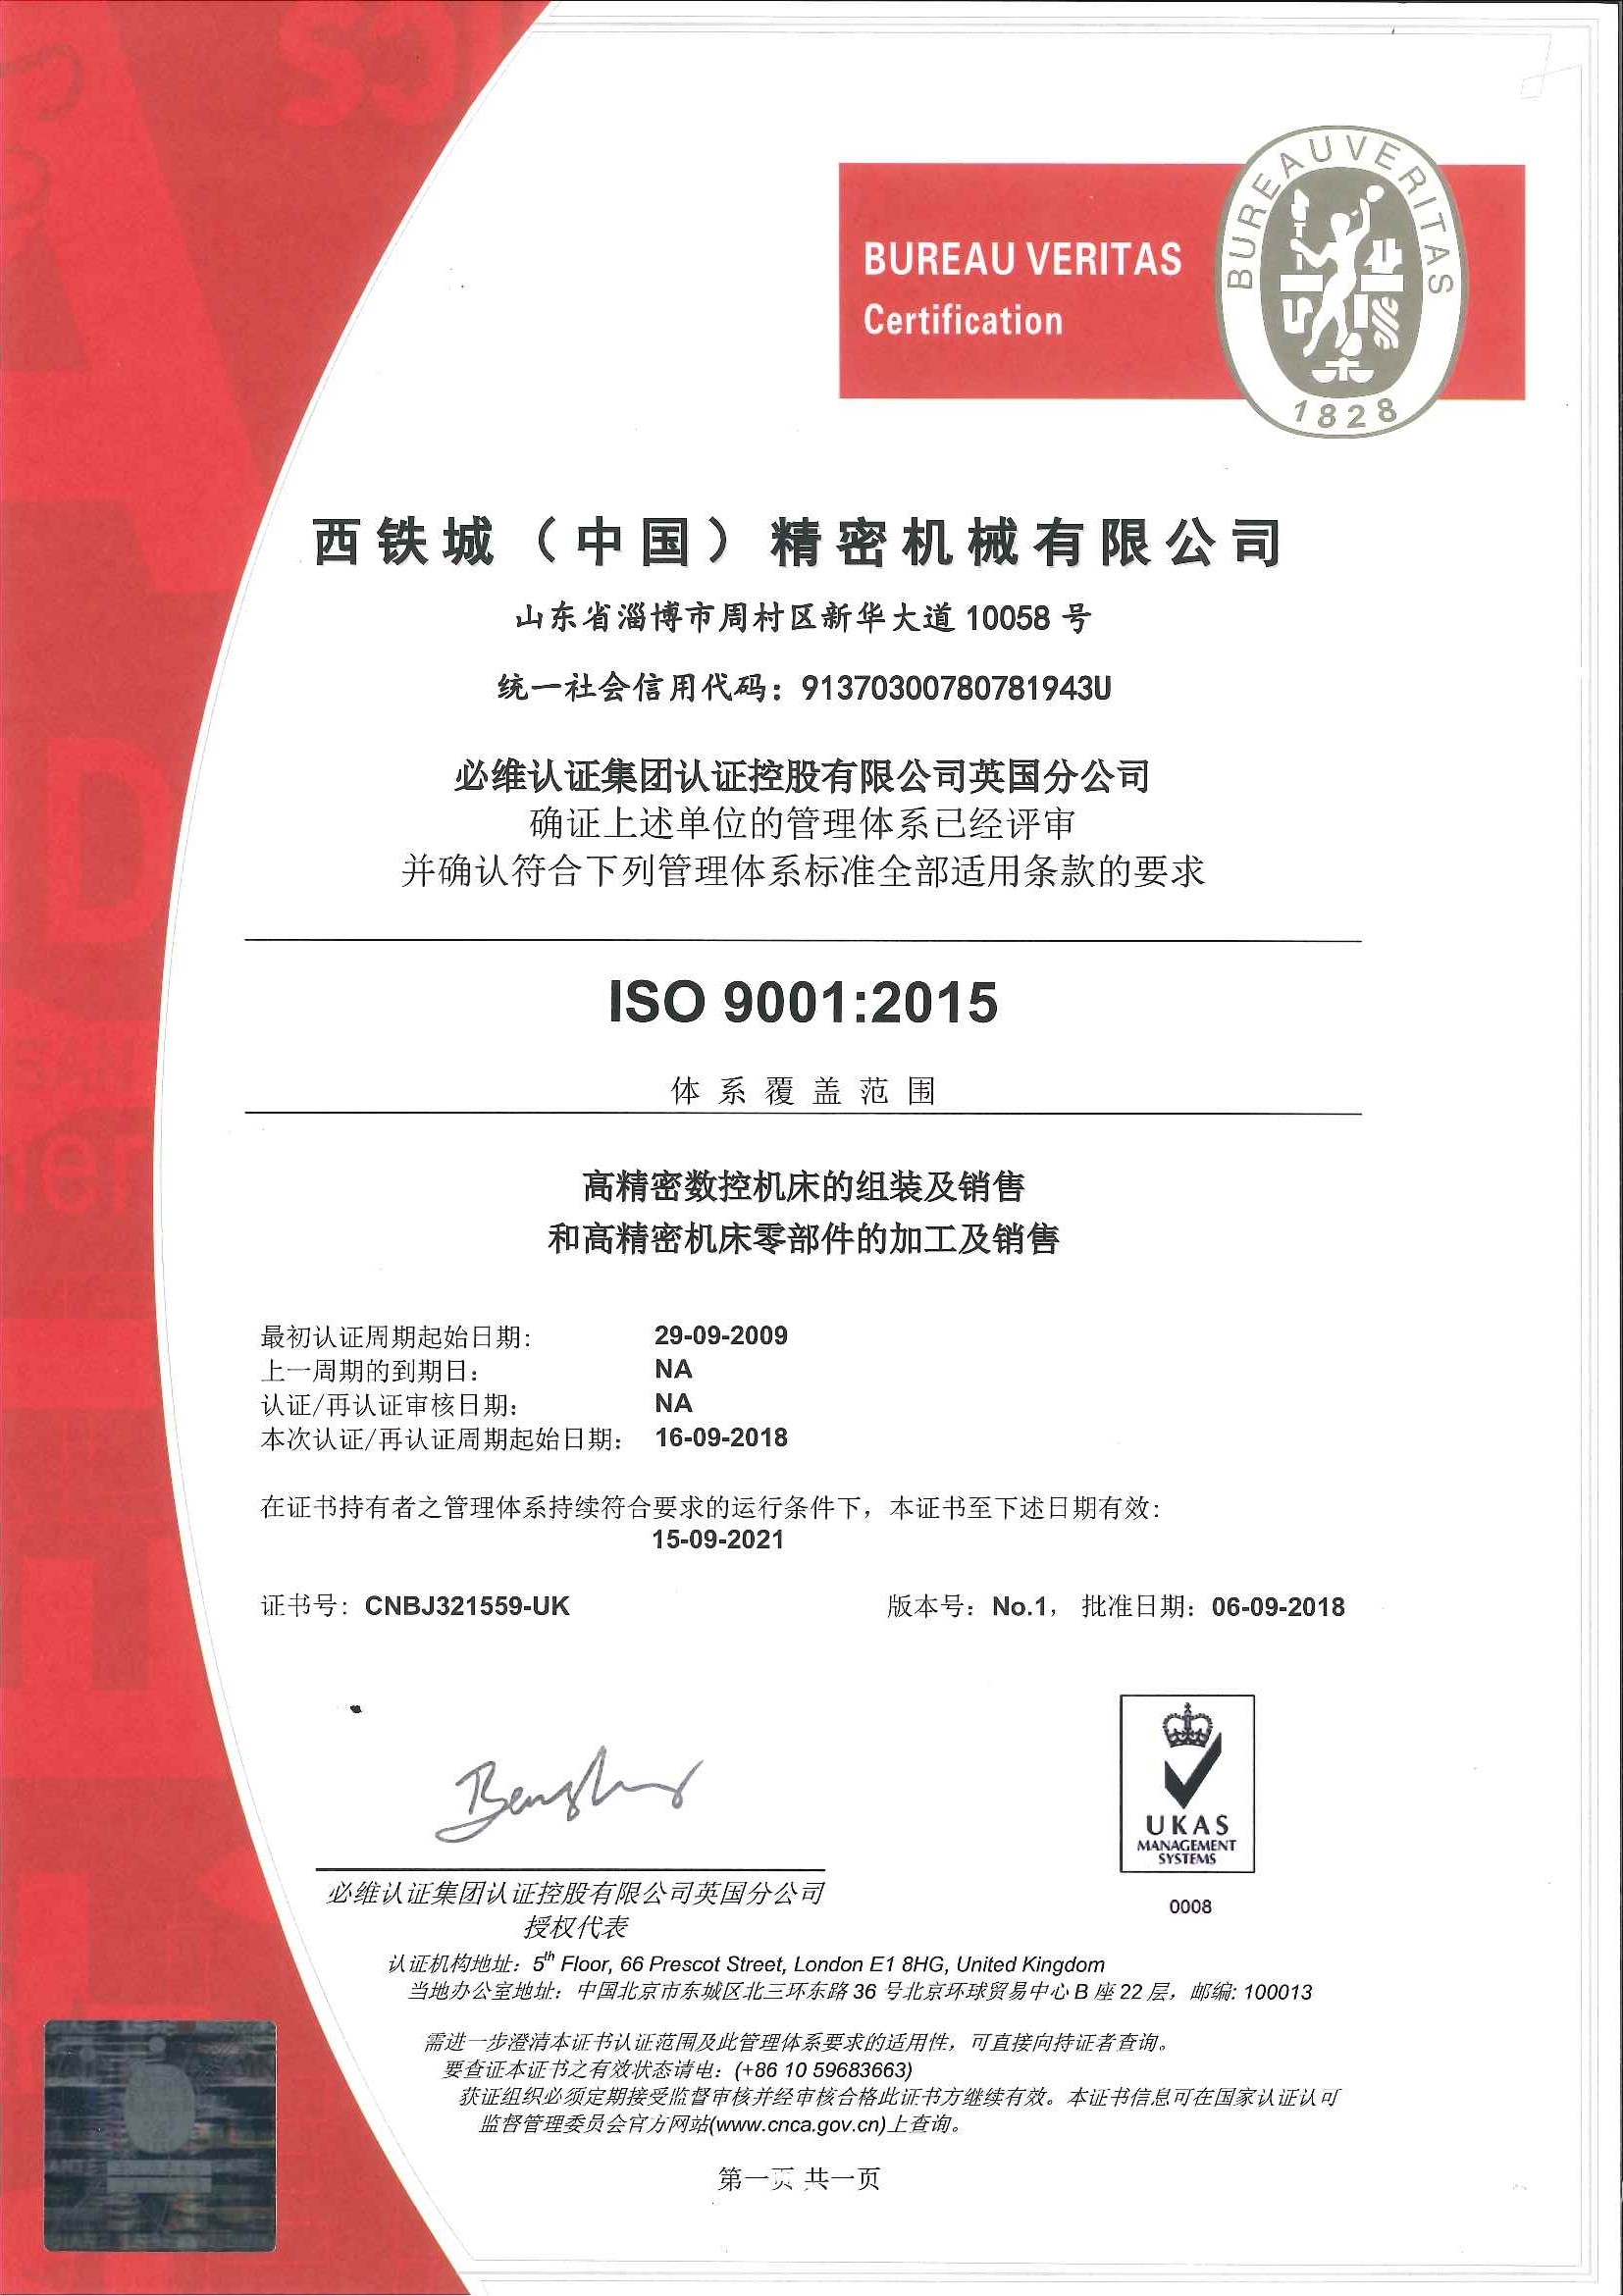 IS09001:2015换版认证顺利完成